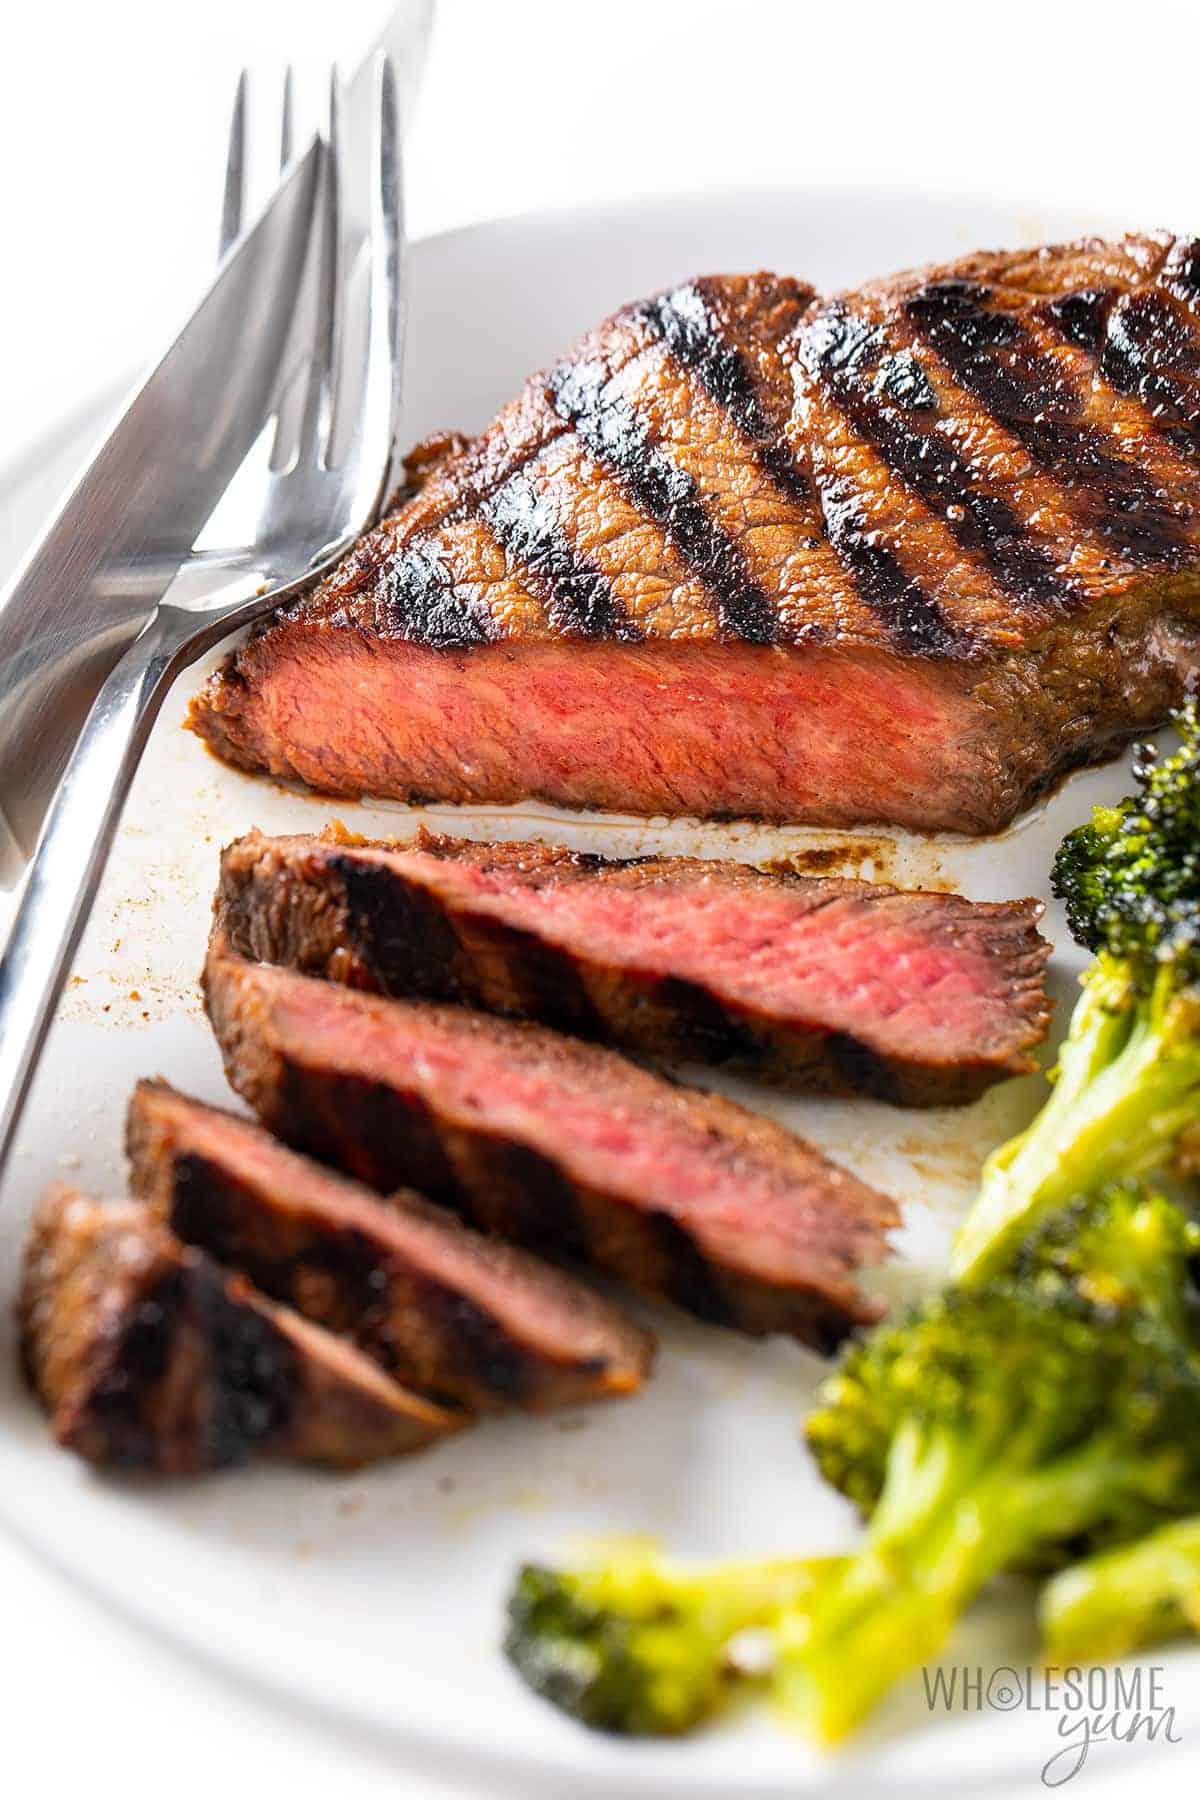 Sliced top sirloin steak recipe on a plate with broccoli.